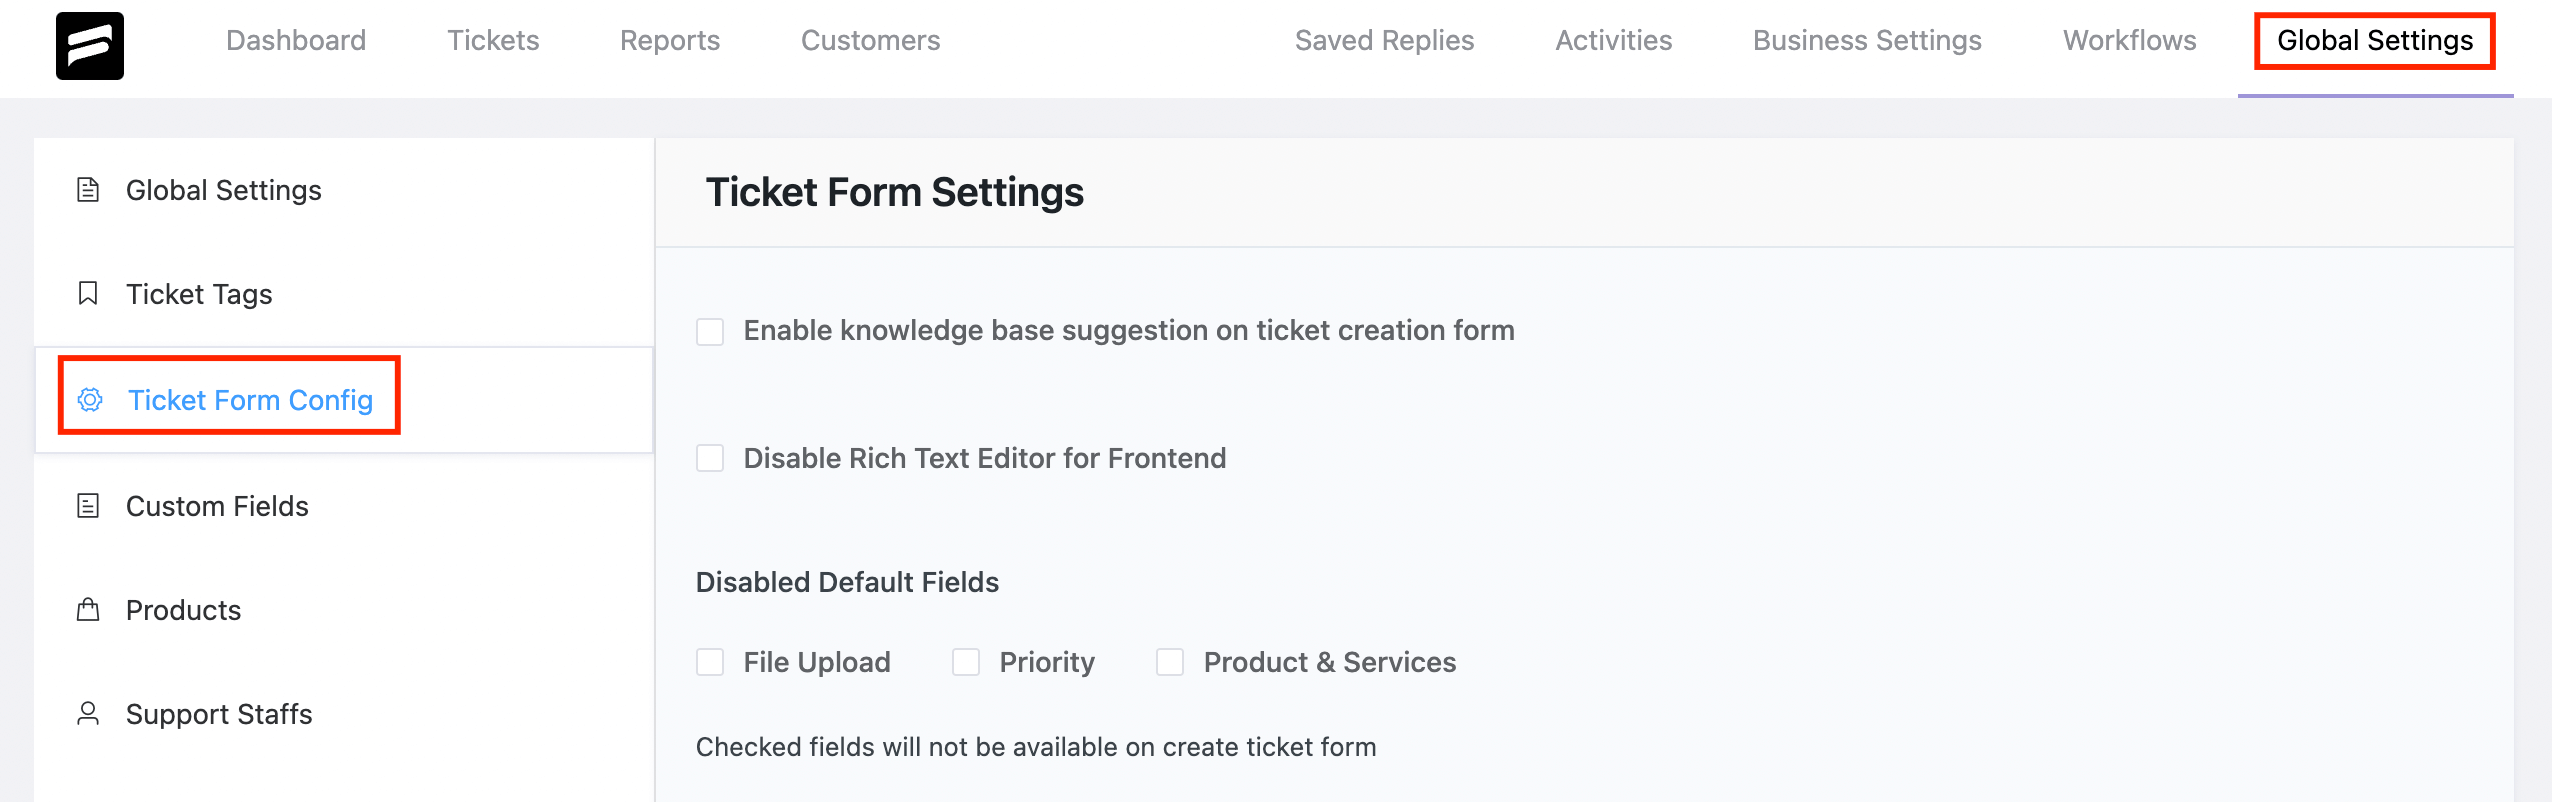 Fluent Support ticket form configuration